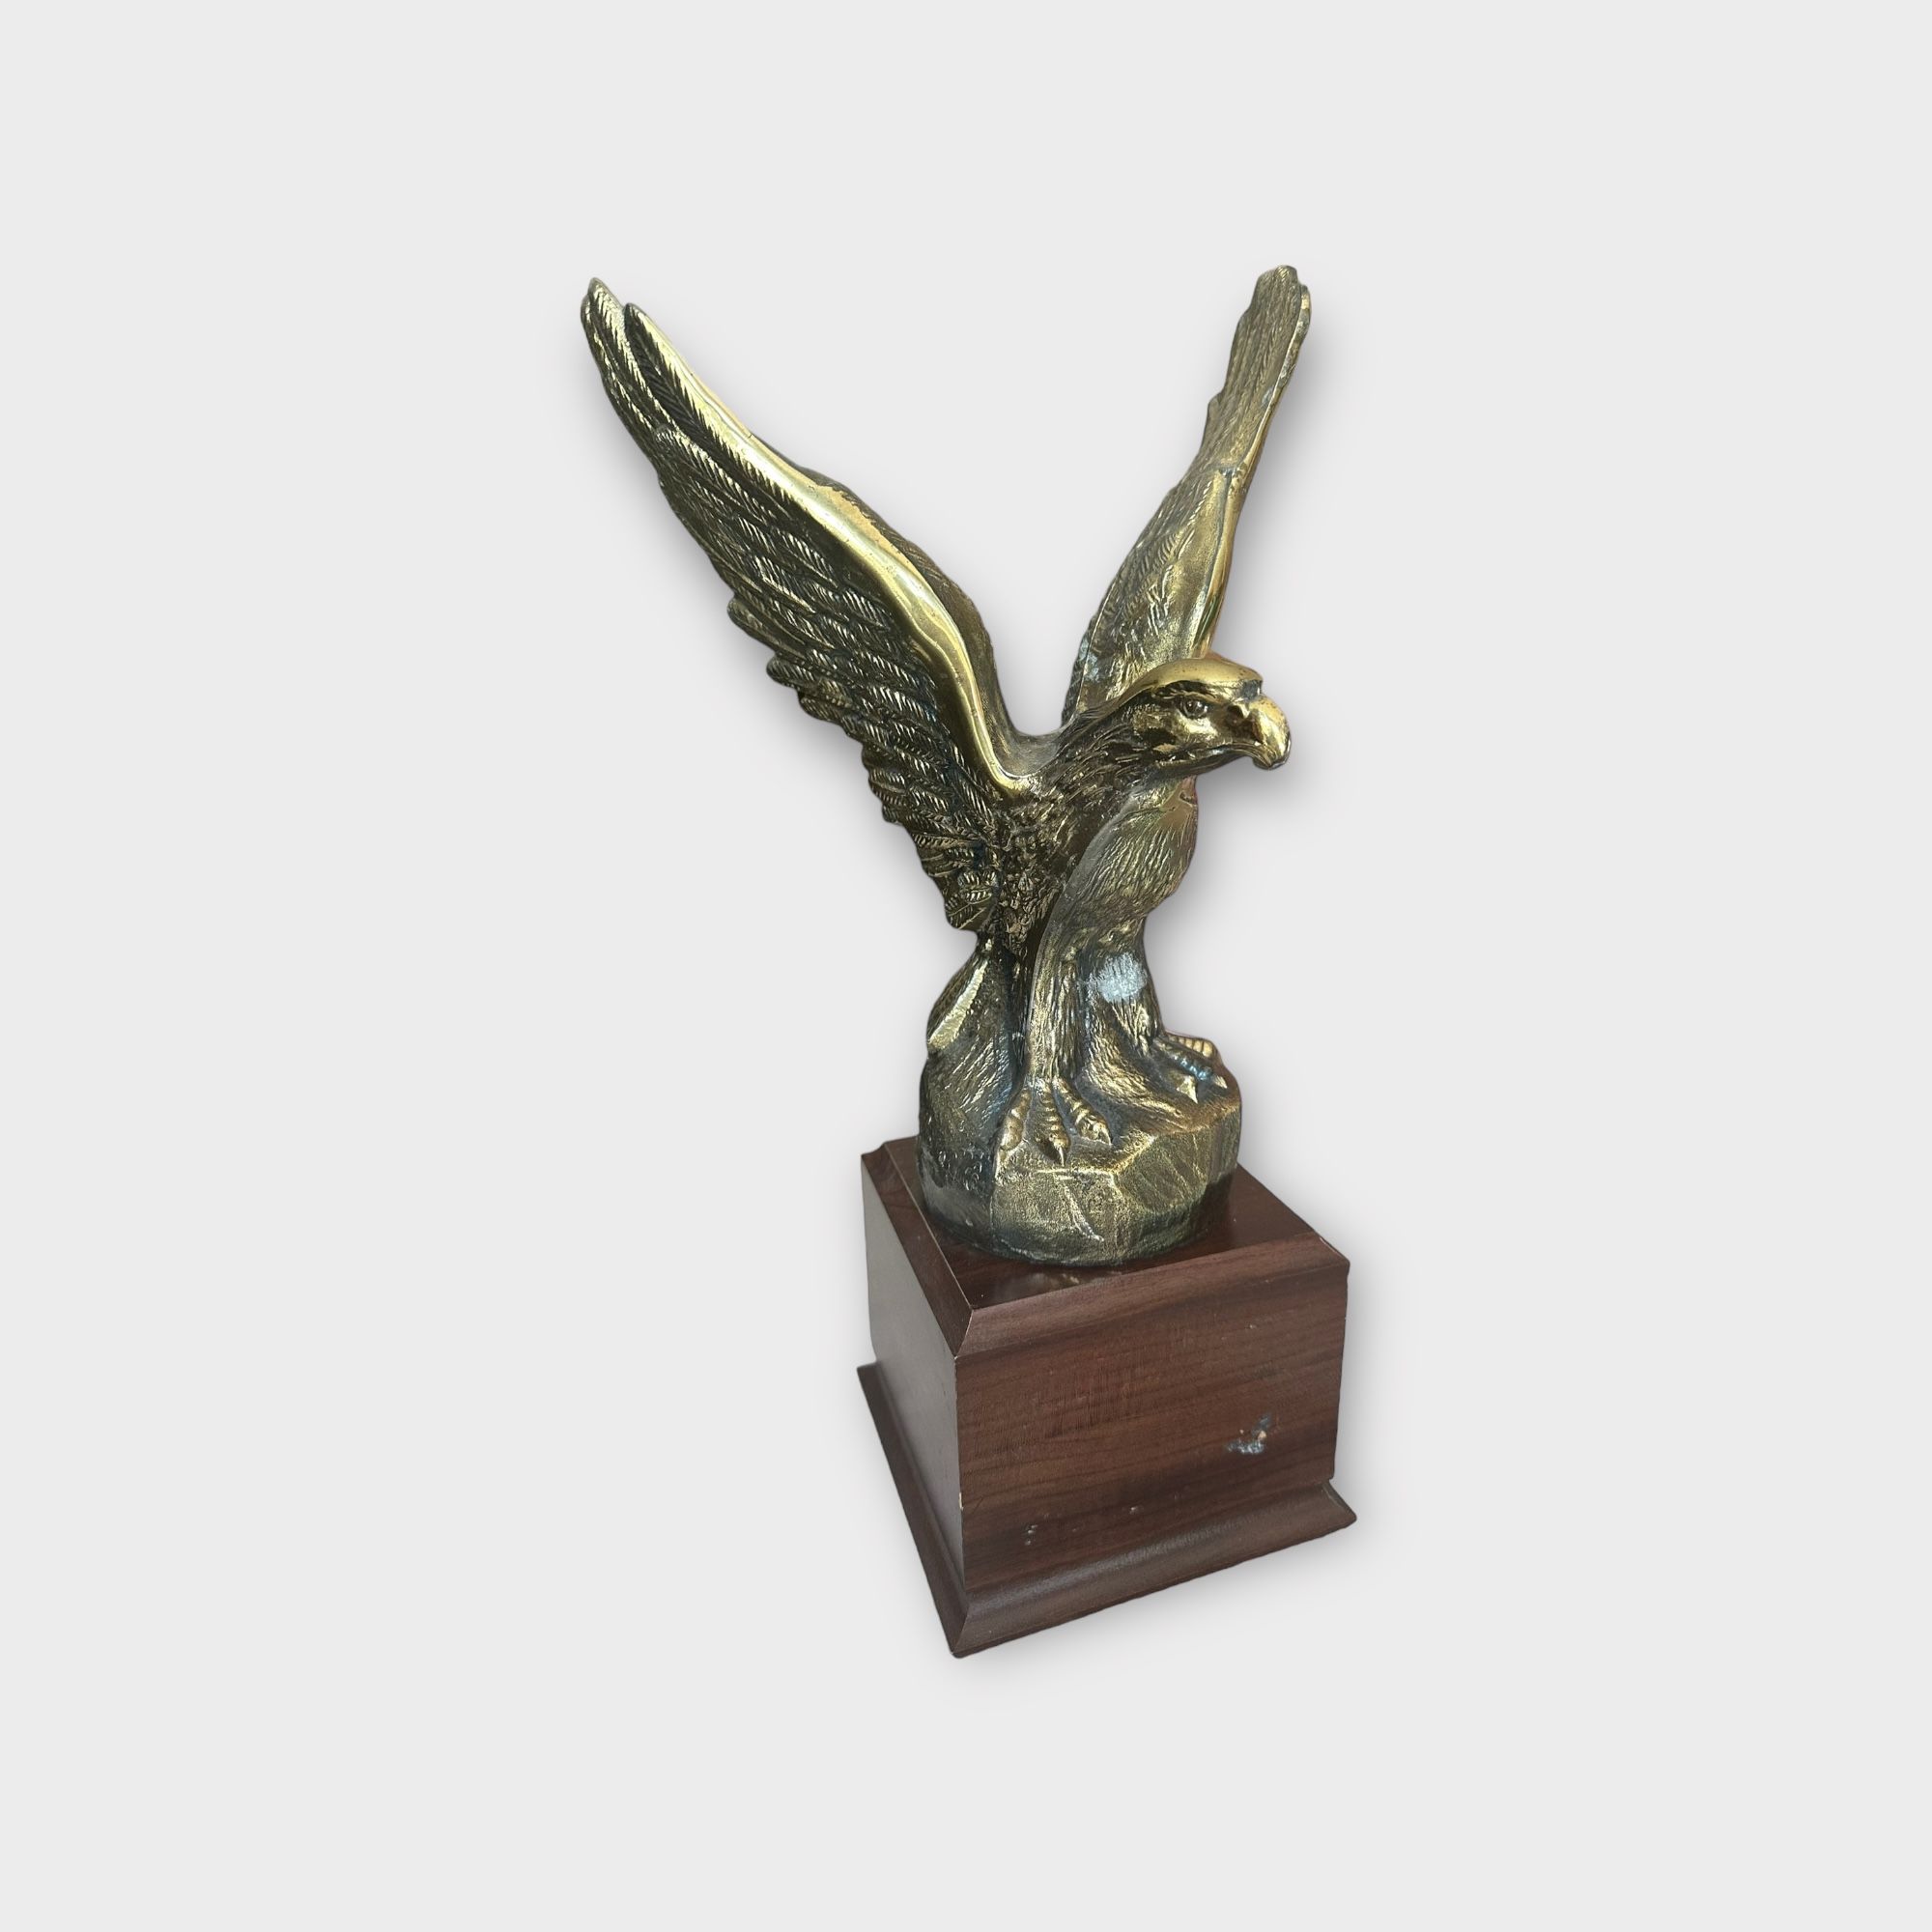 Statue Eagle Brass Figurine on Wooden Base Vintage Statue Decor 20”